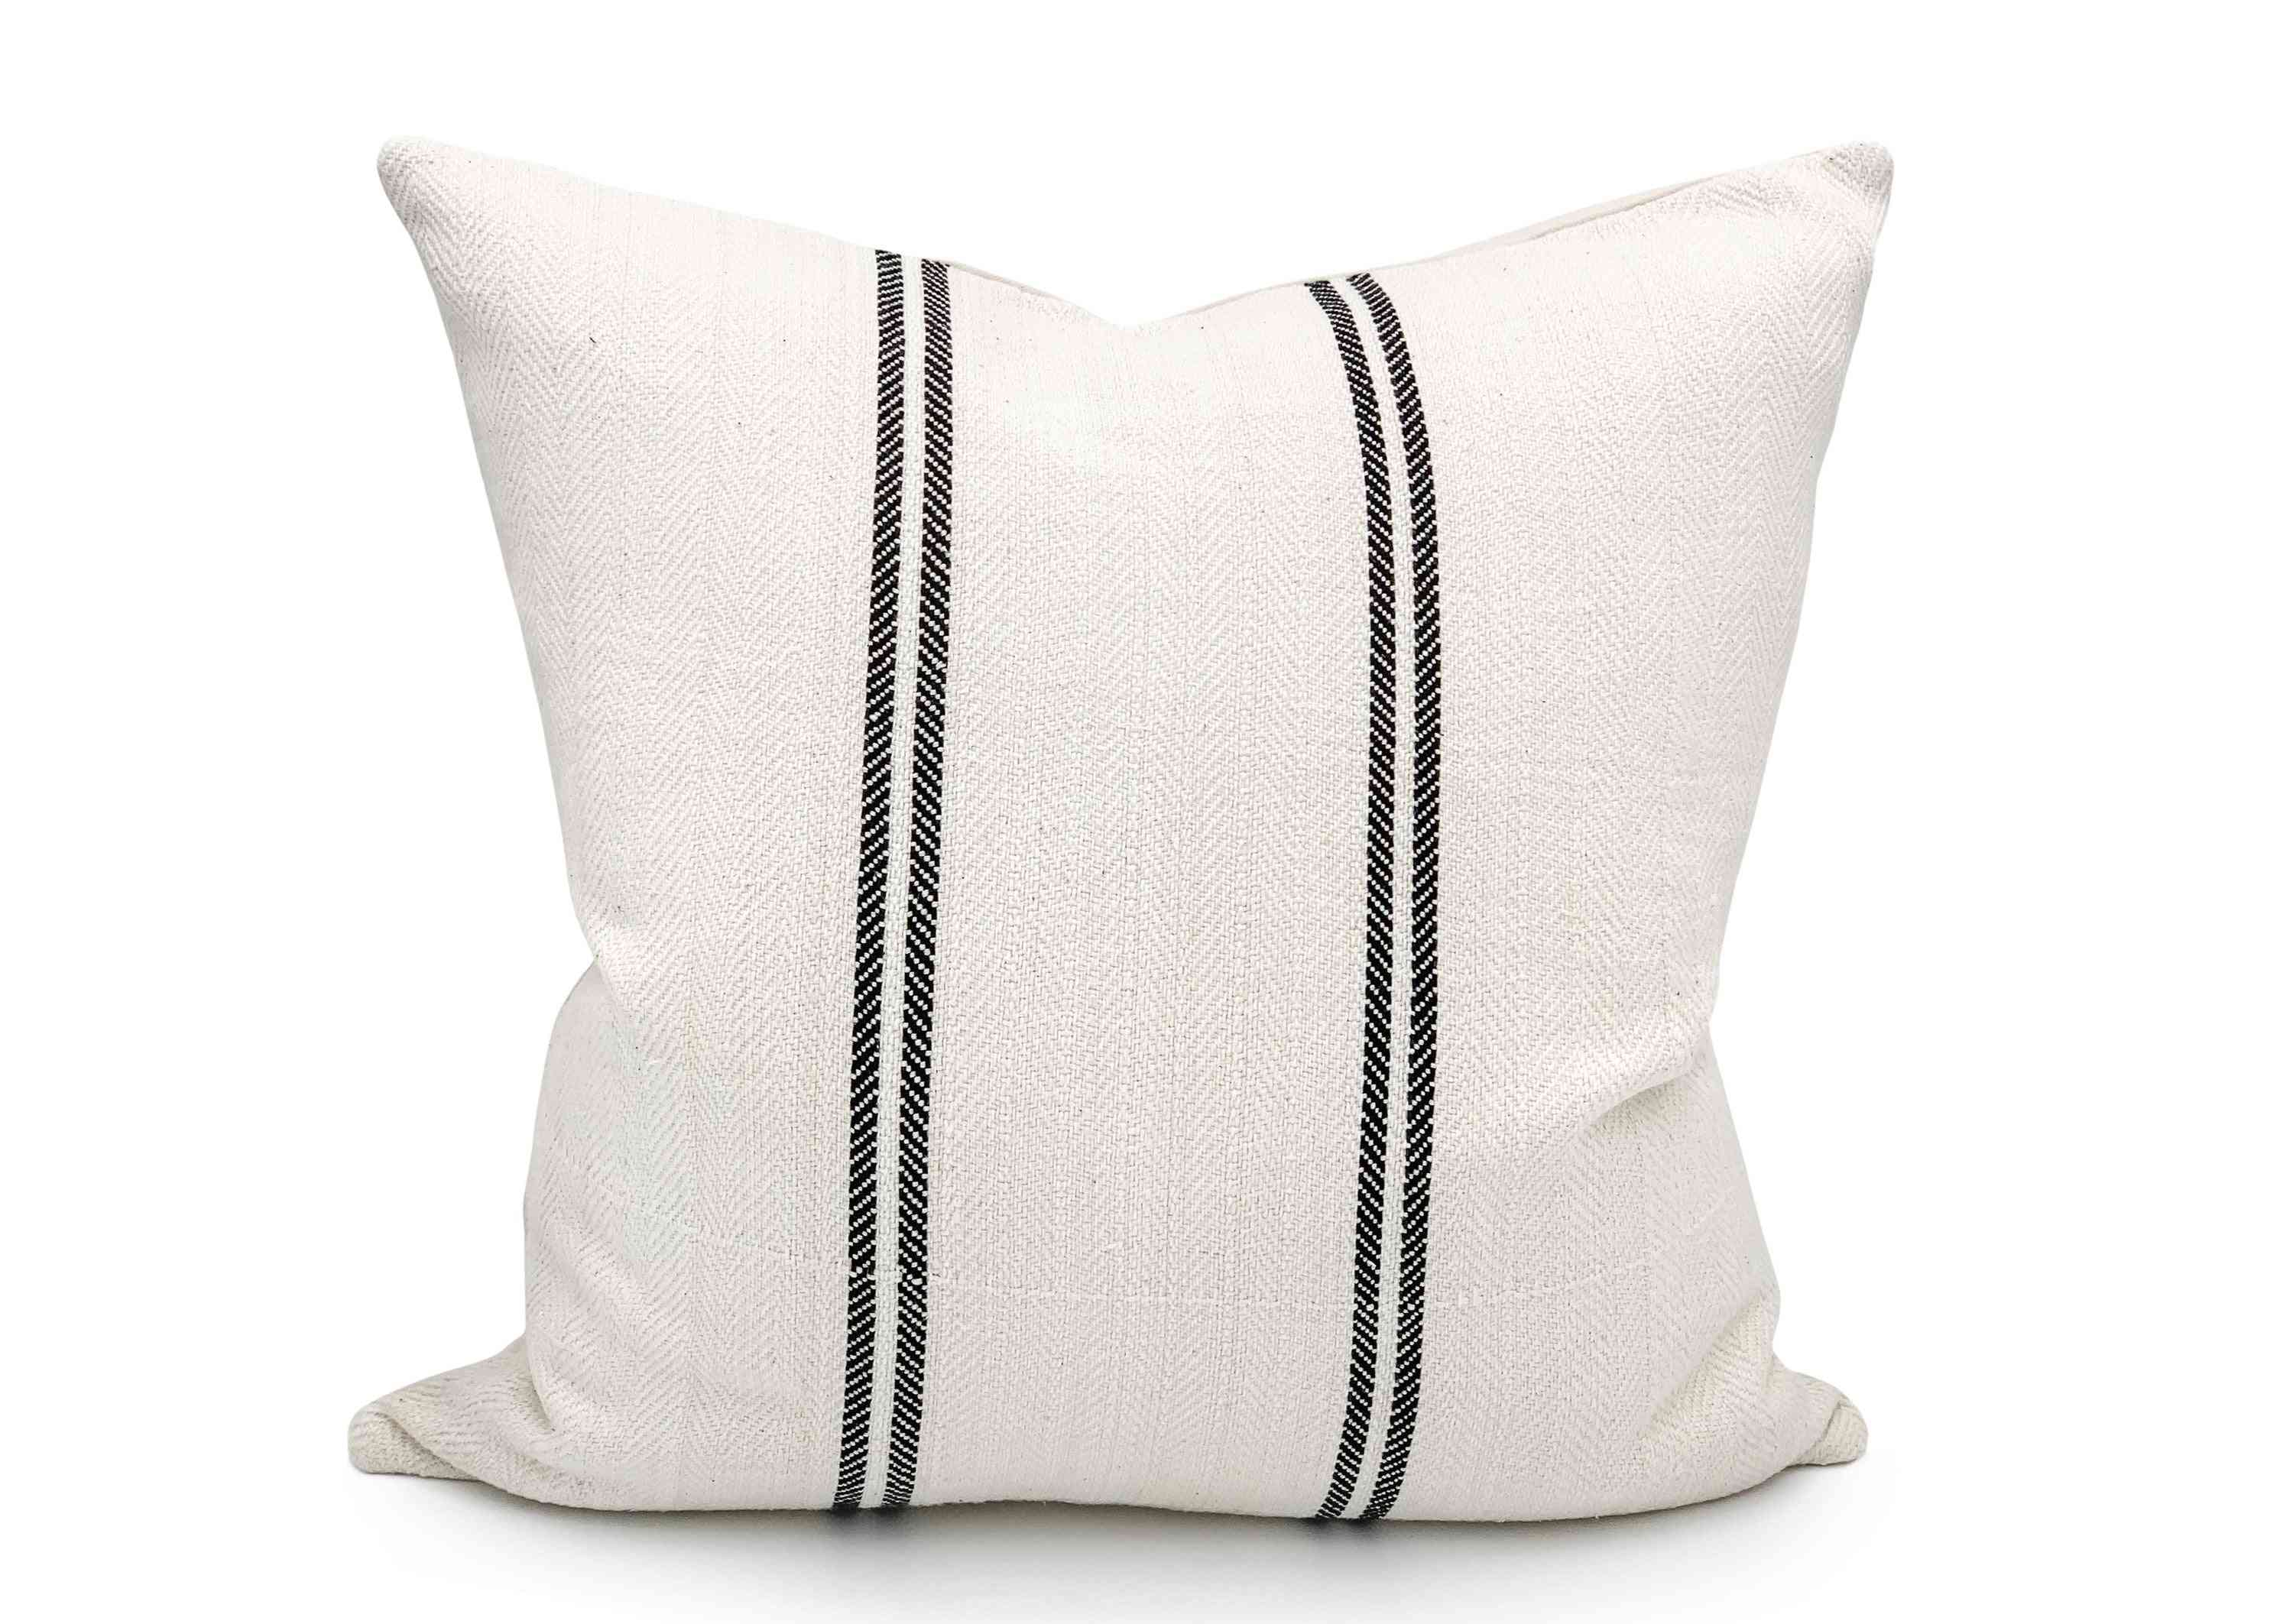 Vintage Grain Sack With Four Black Stripes Pillow Cover